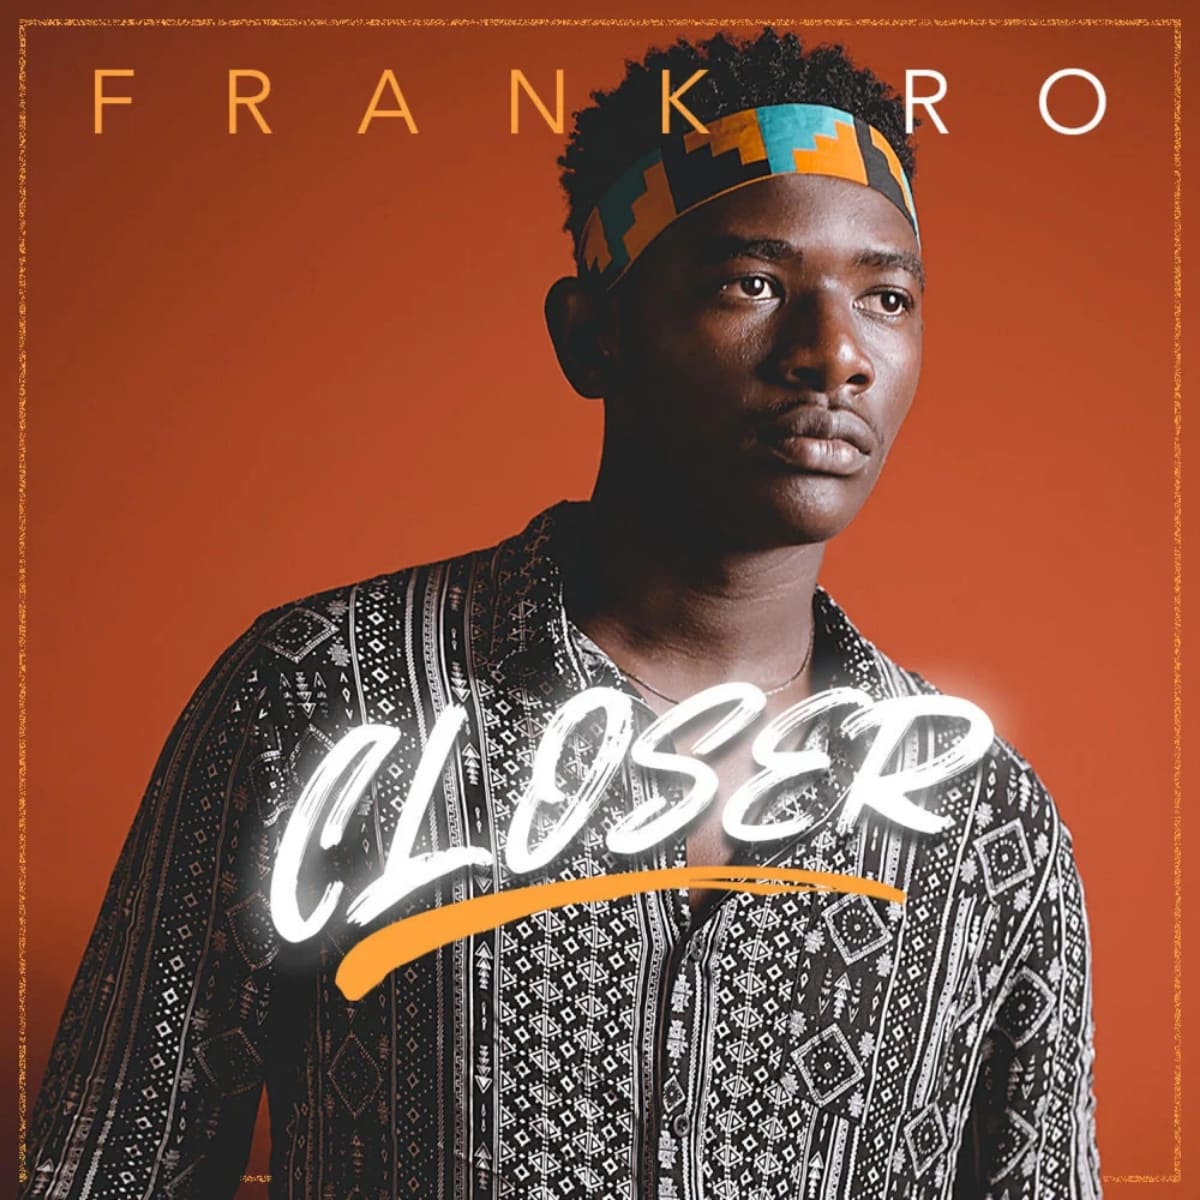 DOWNLOAD: Frank Ro – “CLOSER” Mp3